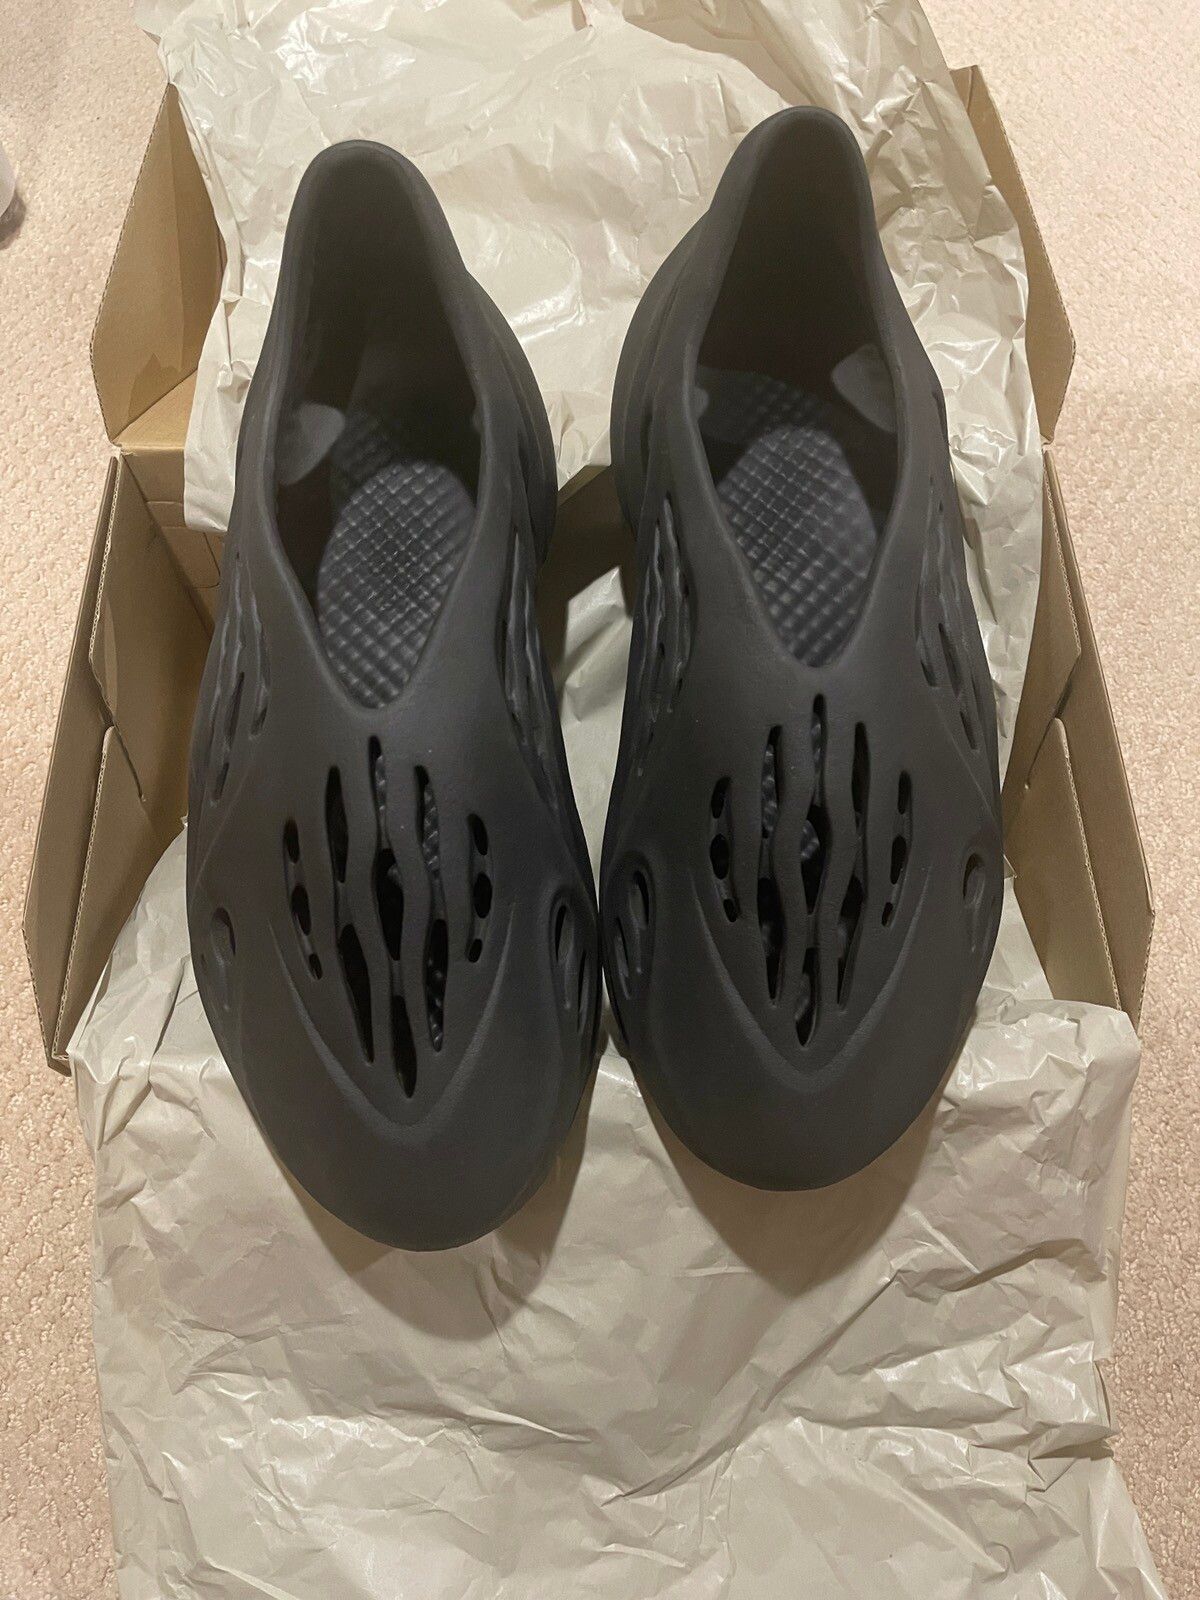 Adidas Yeezy Foam Runners Onyx | Grailed